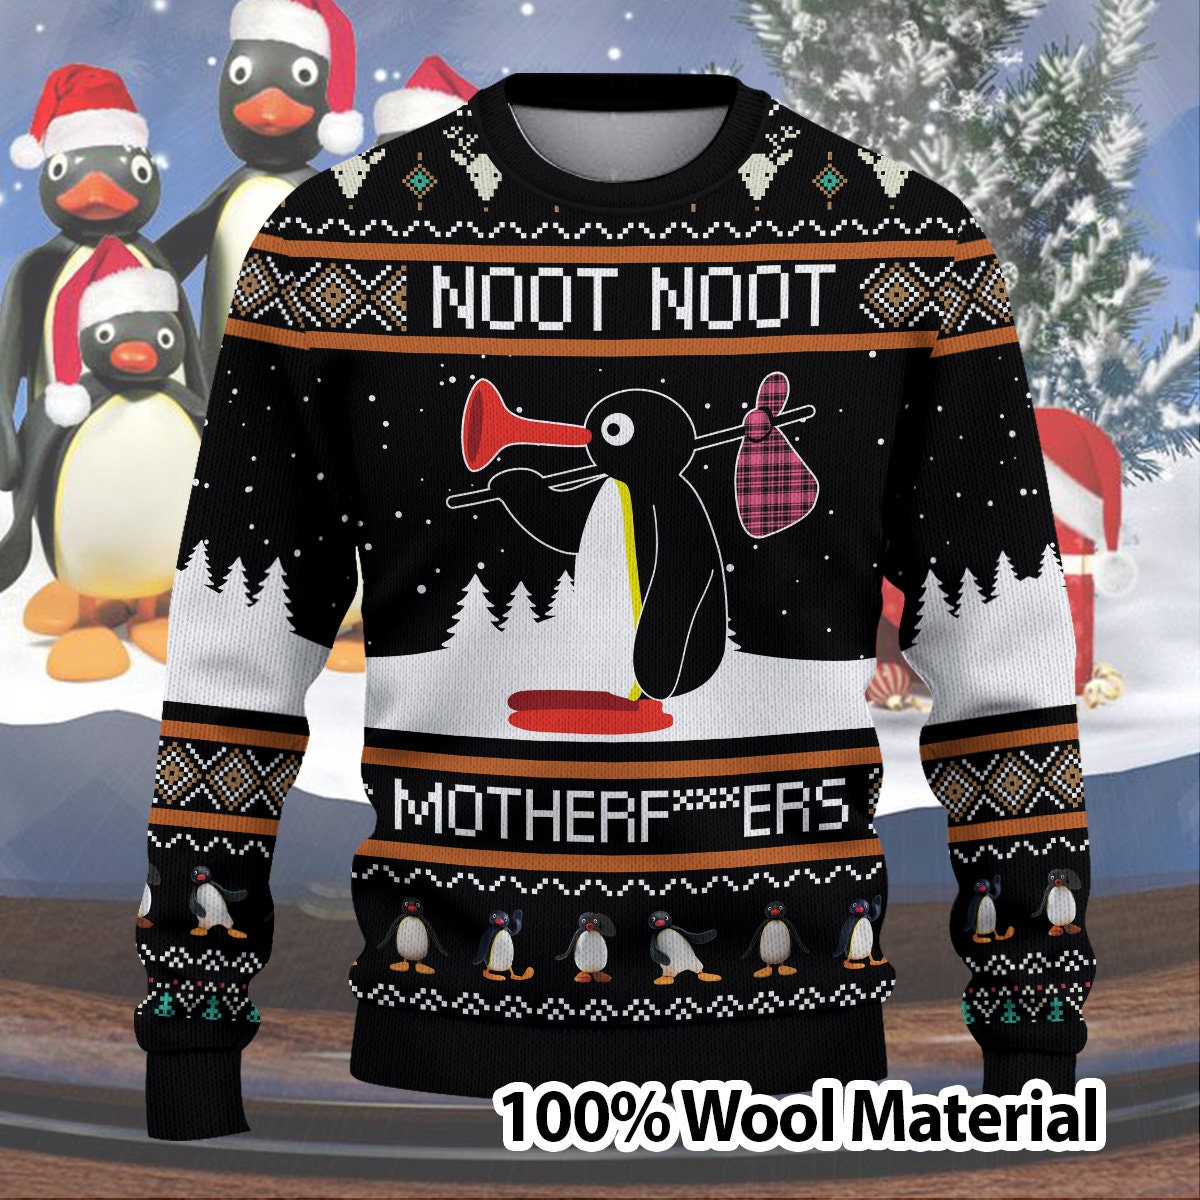 Noot Motherfu***ers - Ugly Sweater